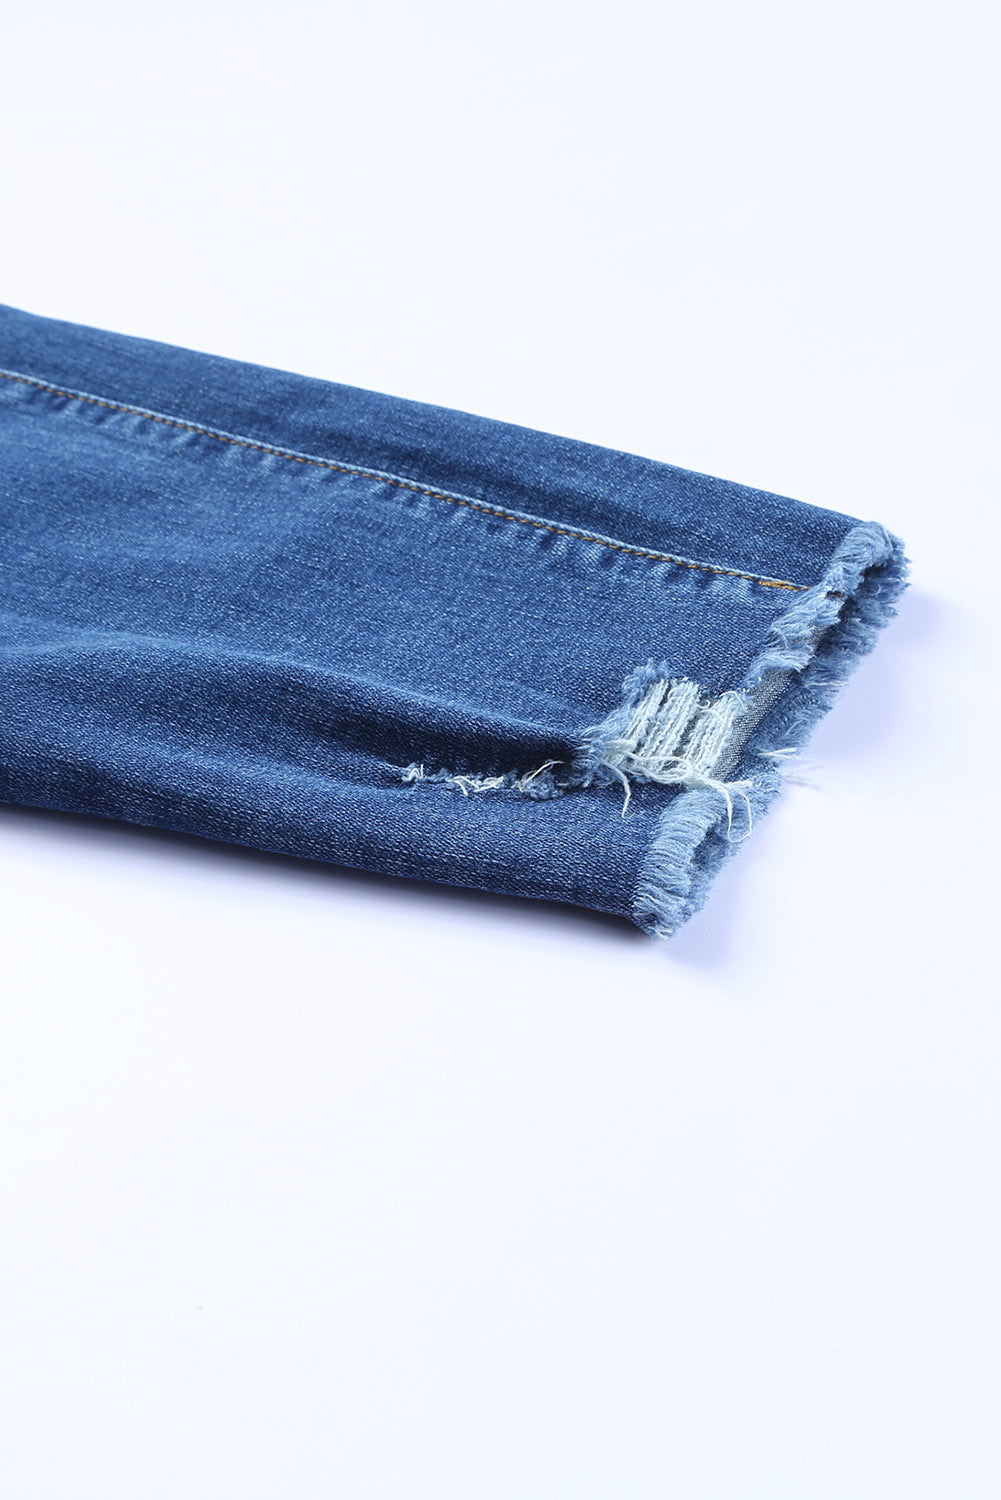 Dark Blue Casual Raw Hem Ankle Length Skinny Jeans